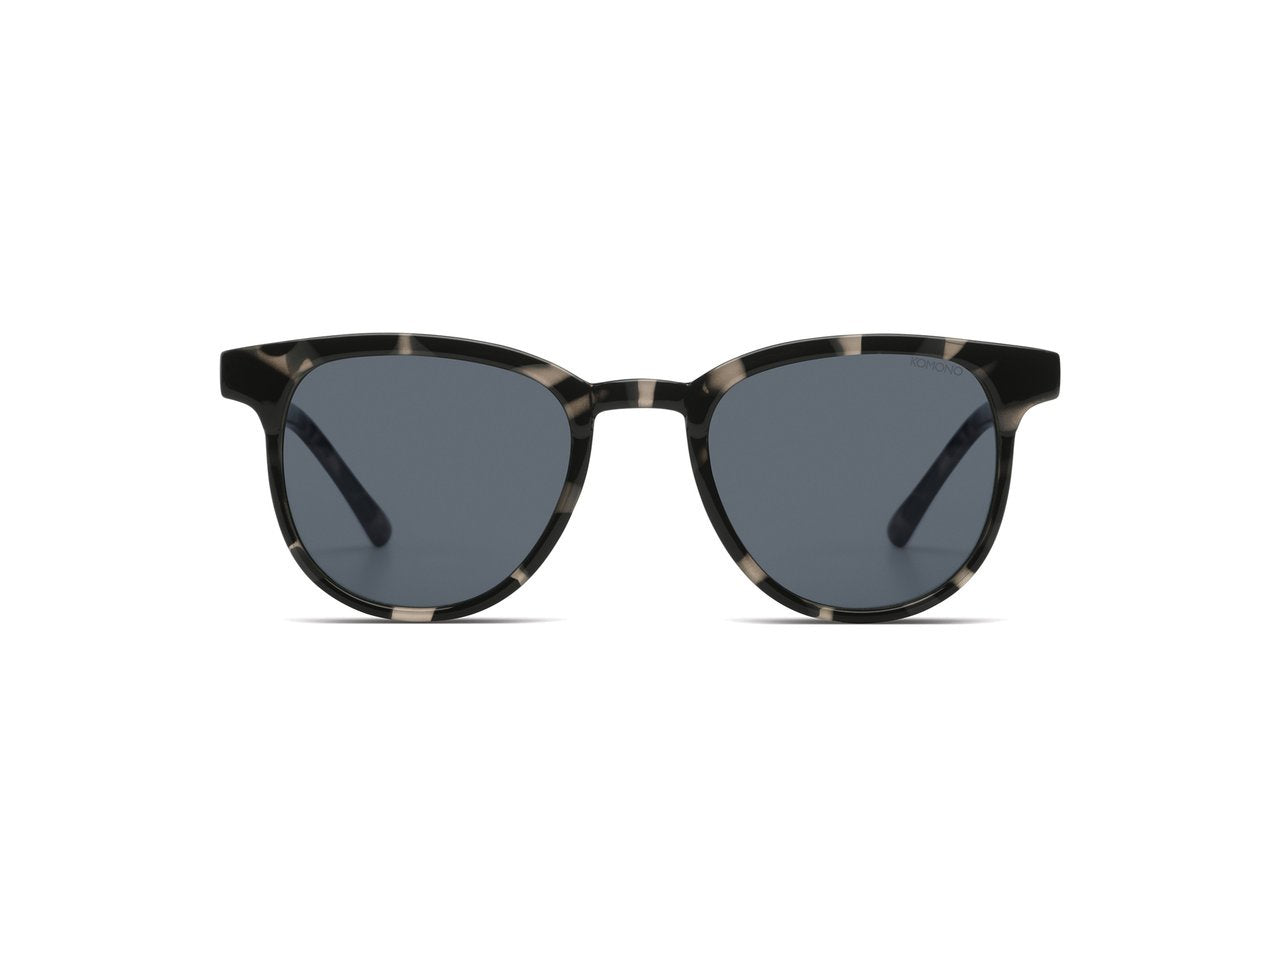 The Francis Acapulco Sunglasses by Komono